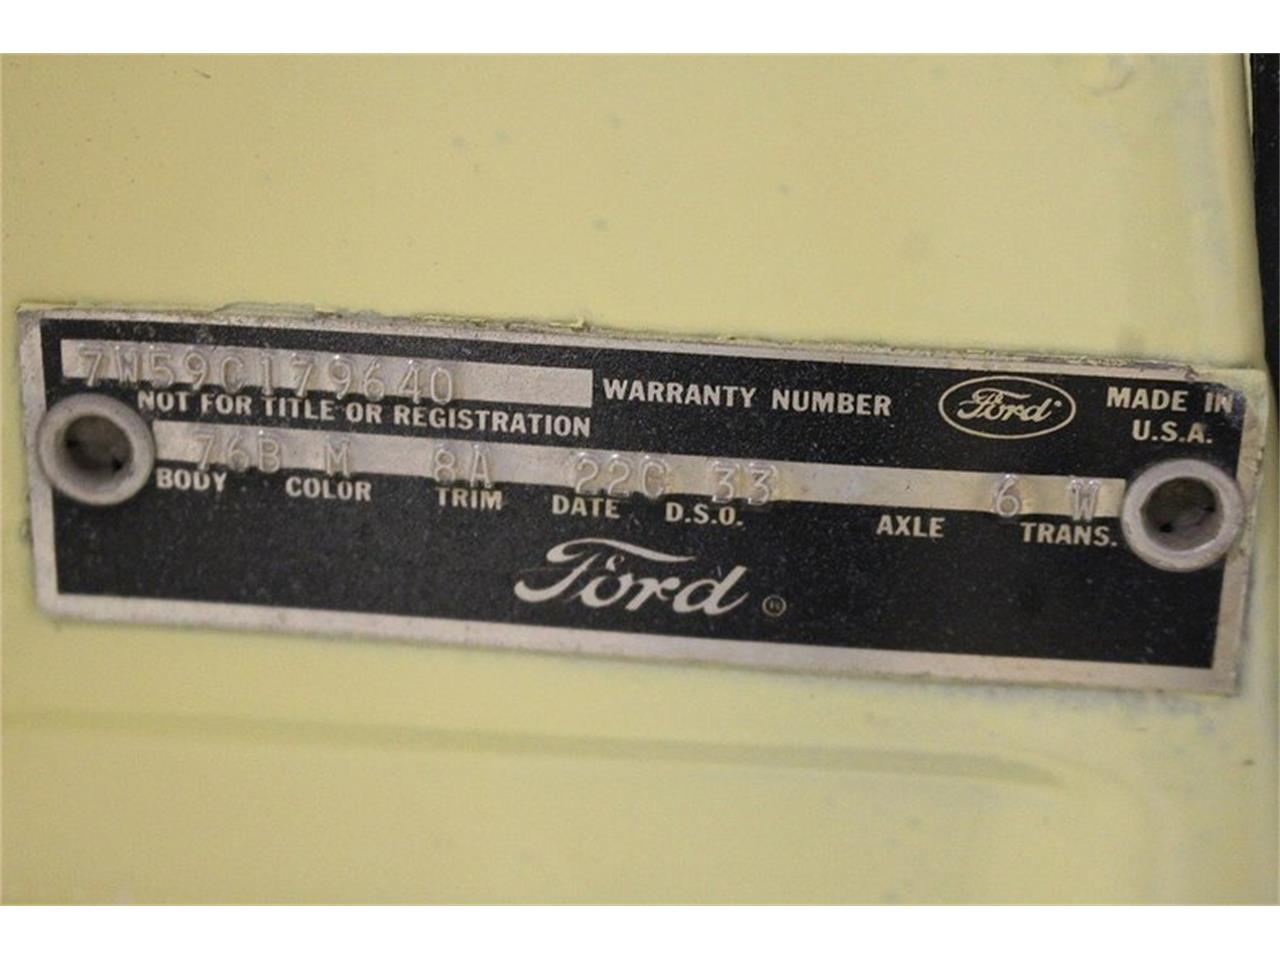 1967 Ford Galaxie 500 XL for Sale | ClassicCars.com | CC-1032320